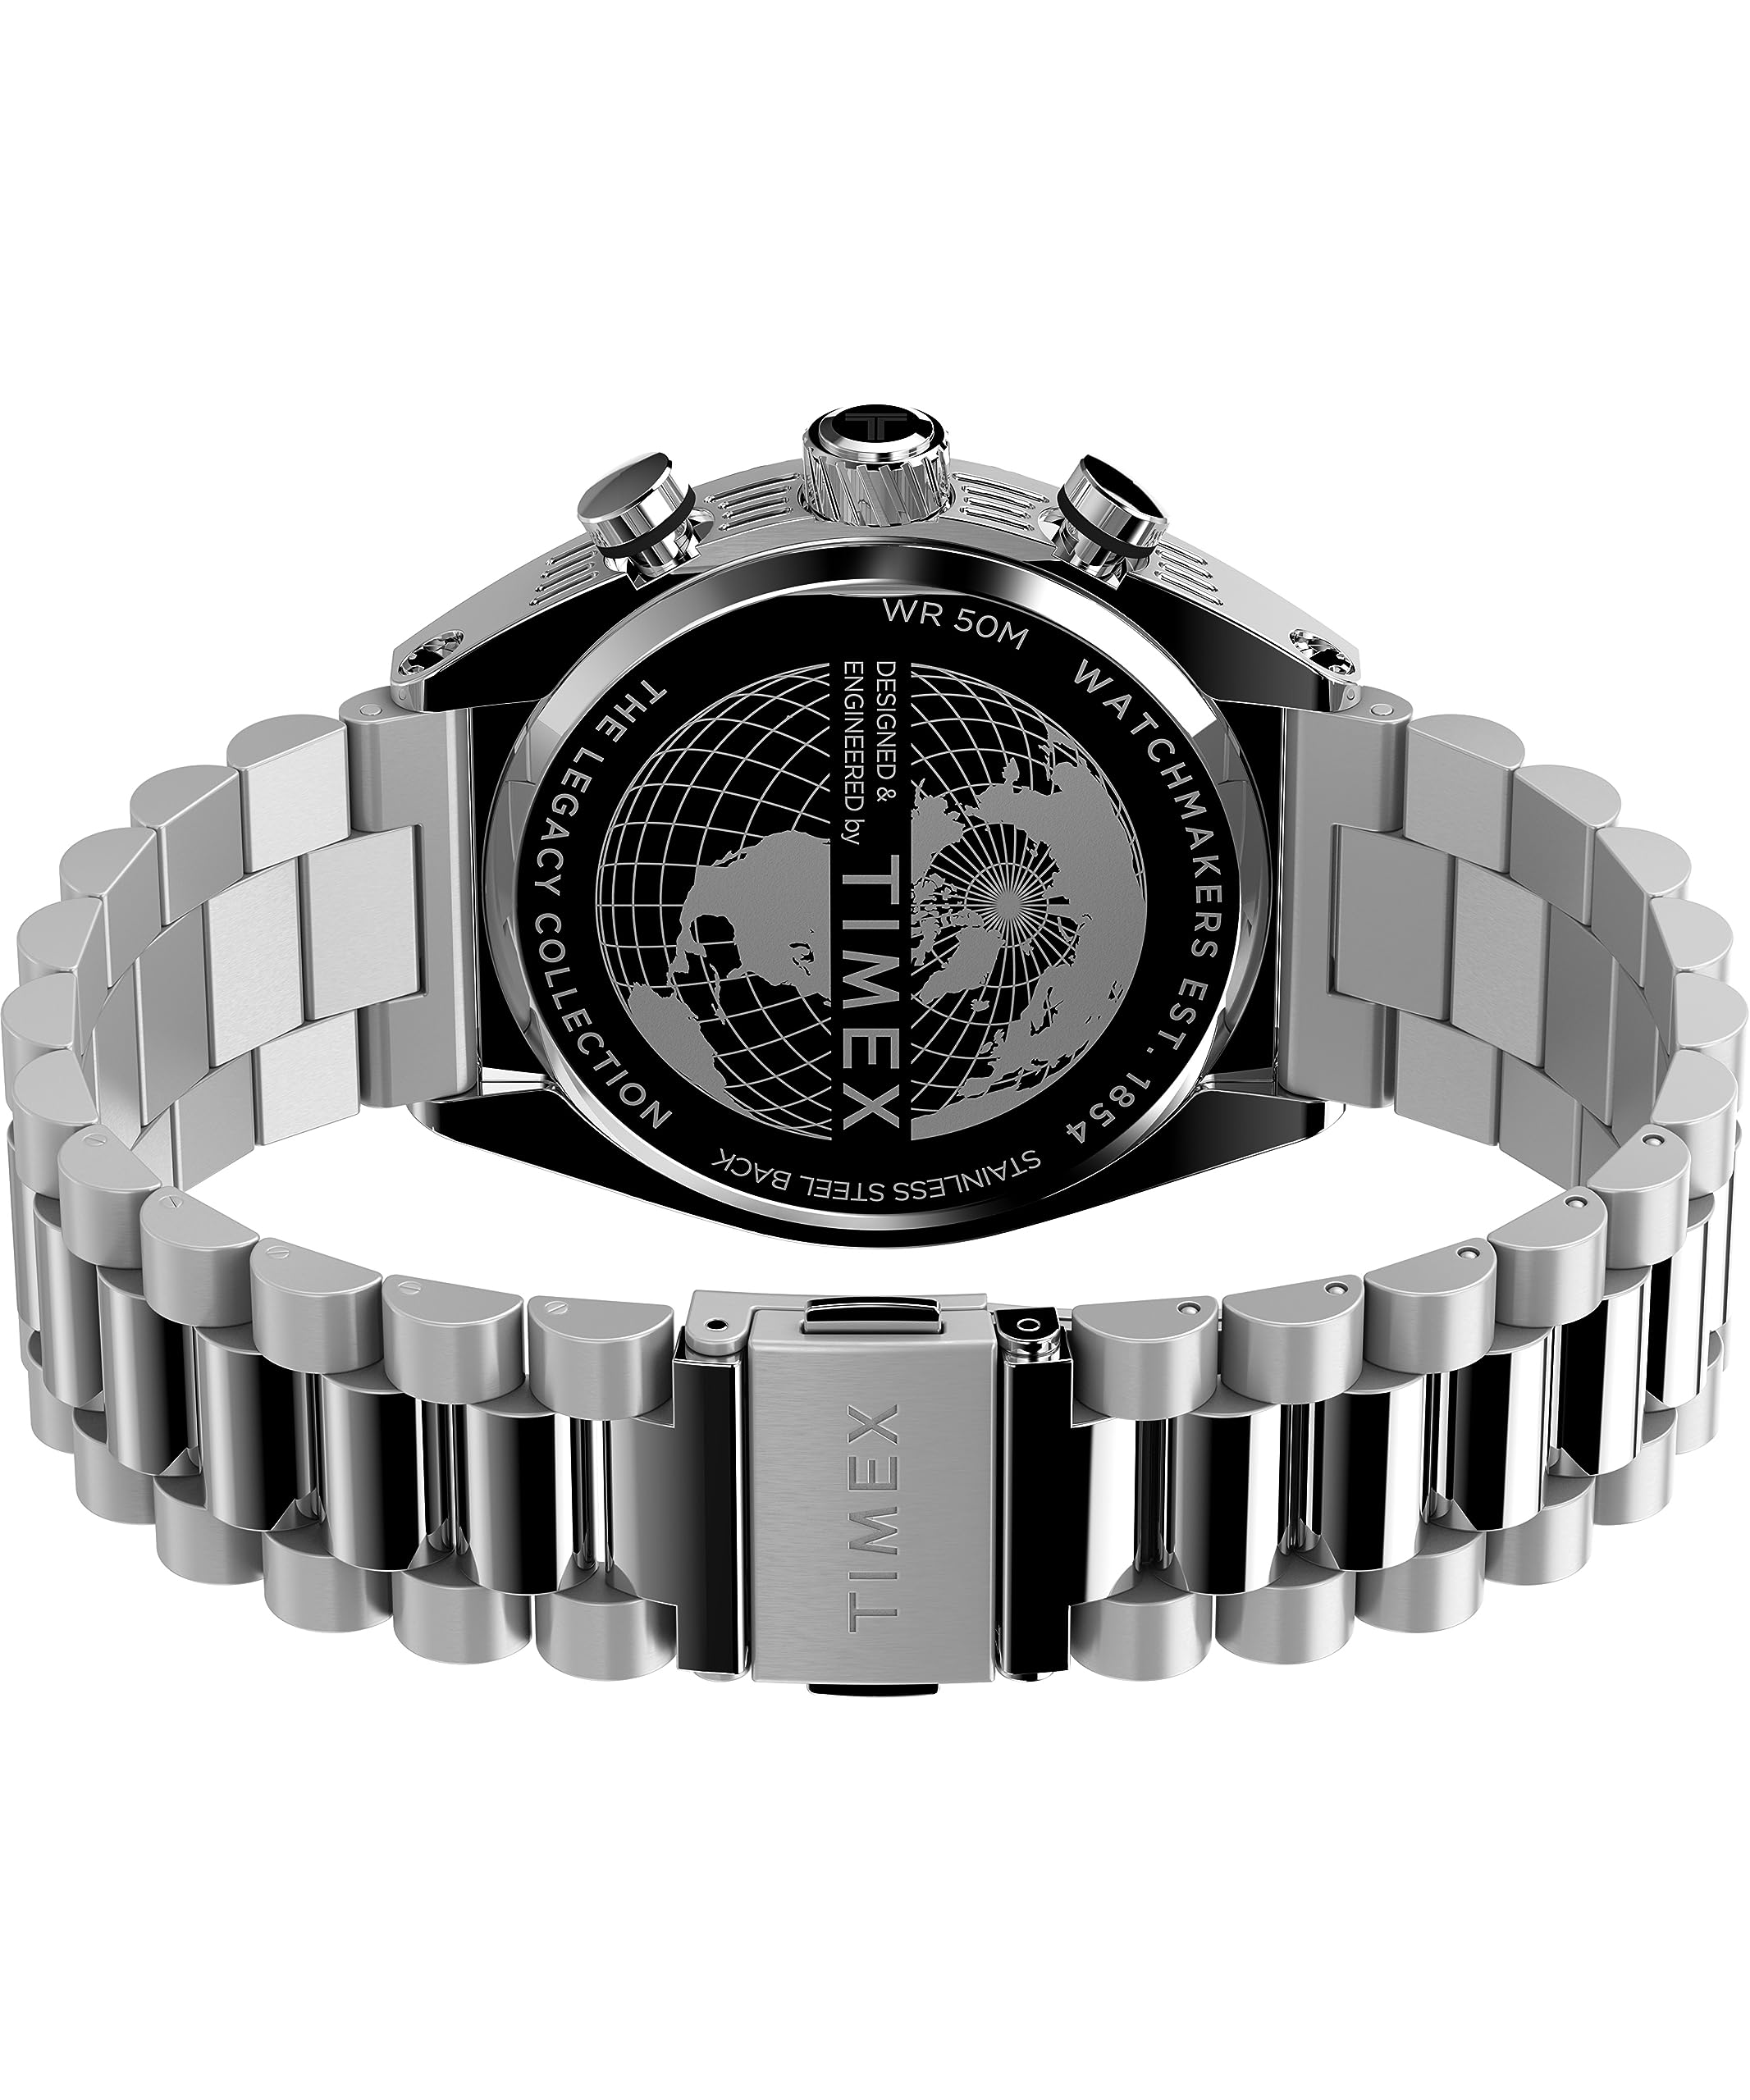 Timex Men's Legacy Watch